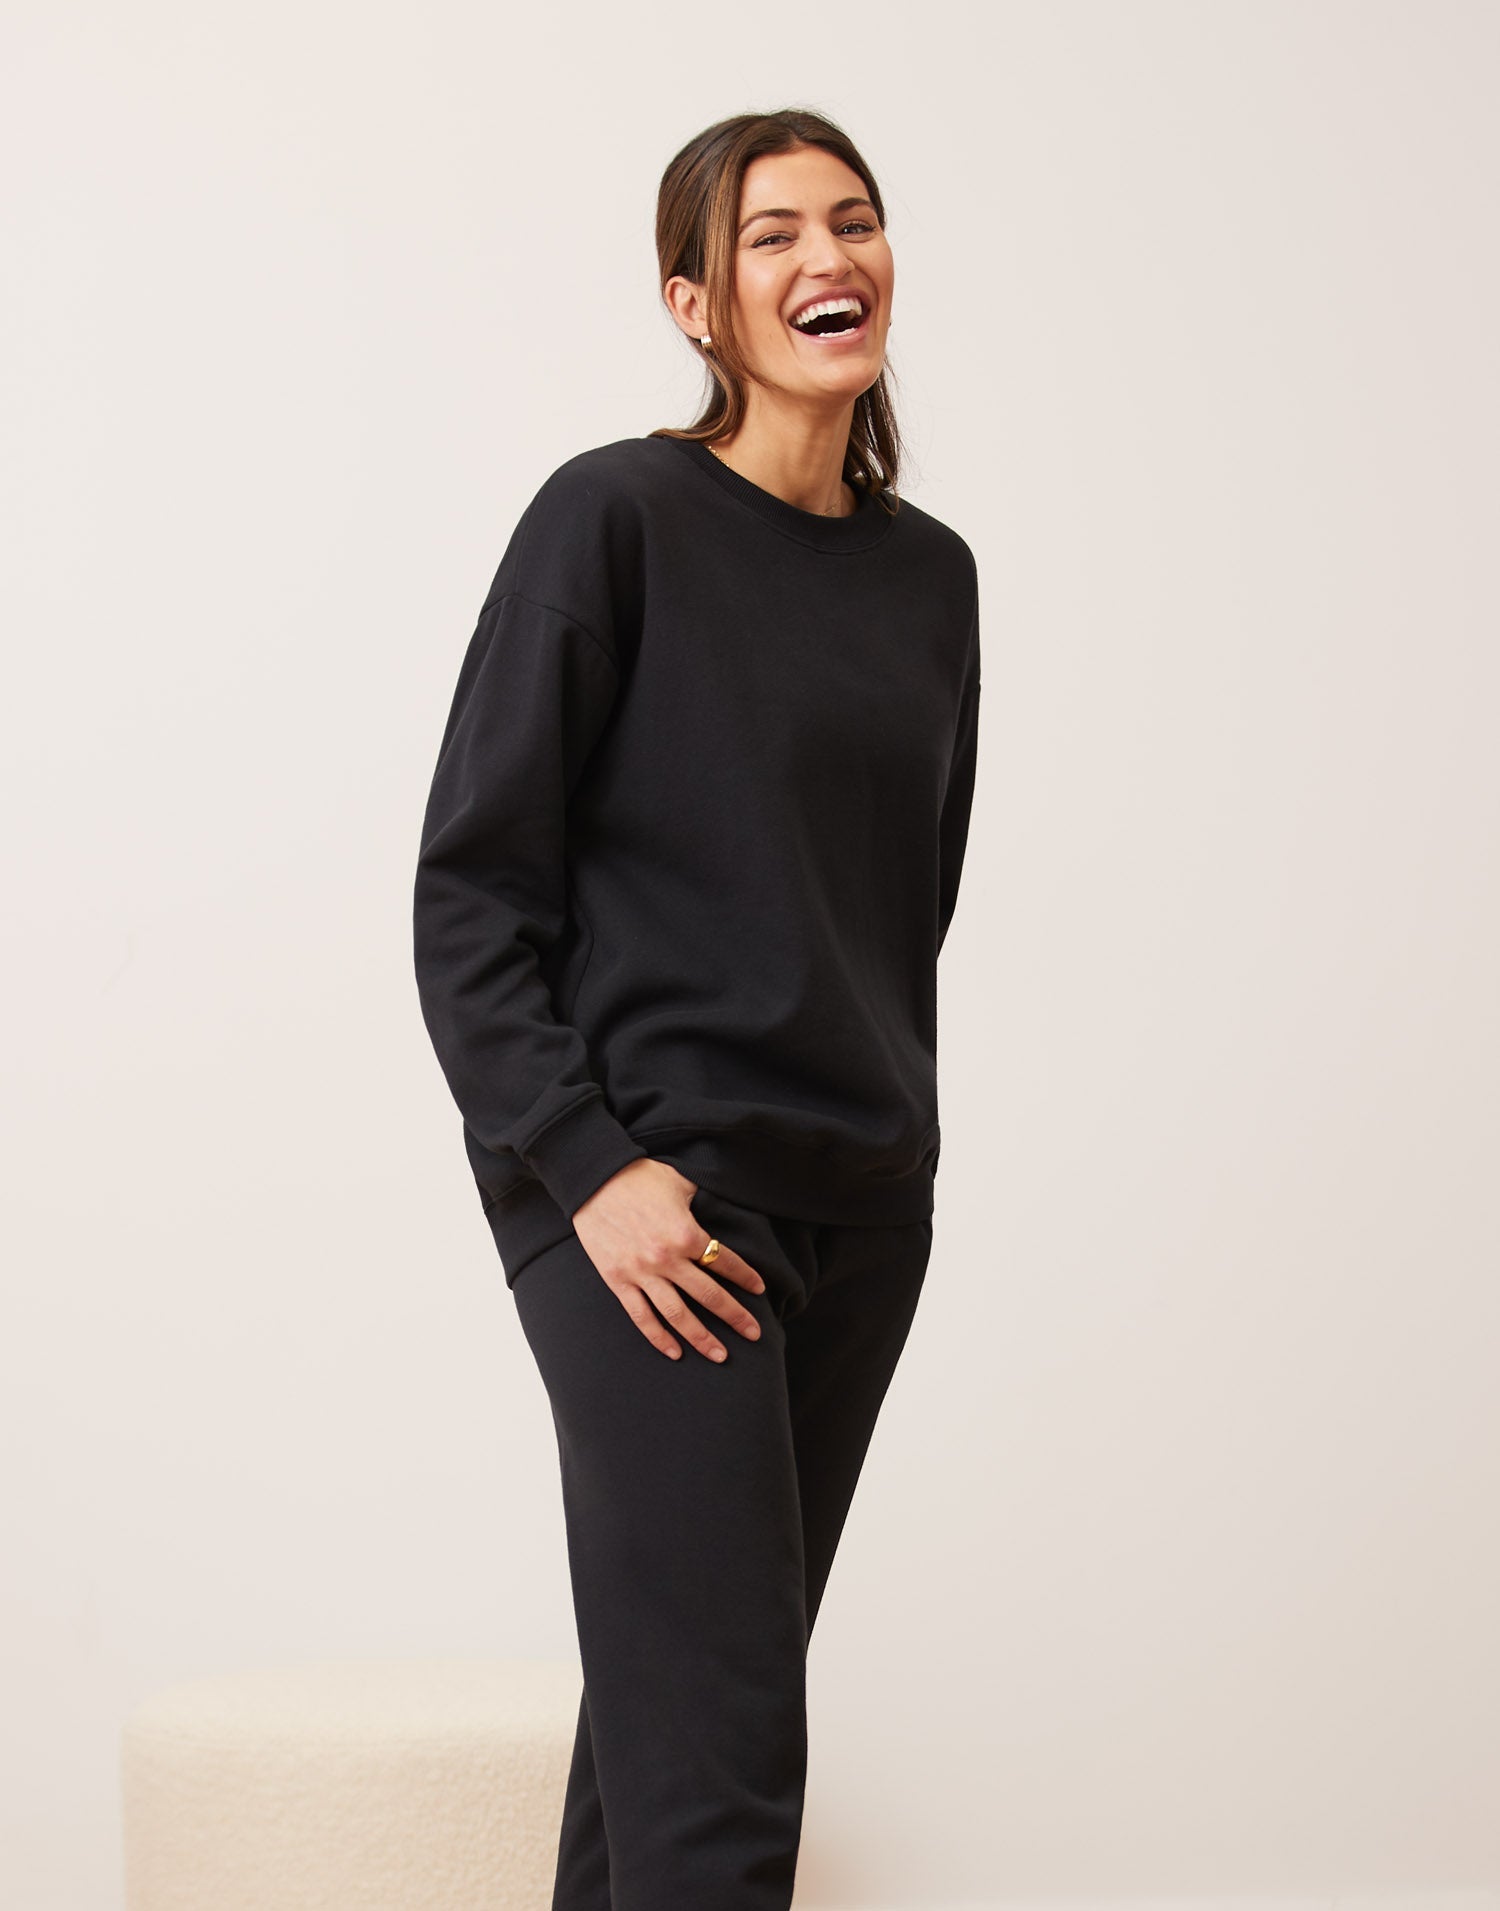 Crewneck Sweatshirt Women Side Slit Pullover Tops Long Sleeve Oversized  Sweatshirts 